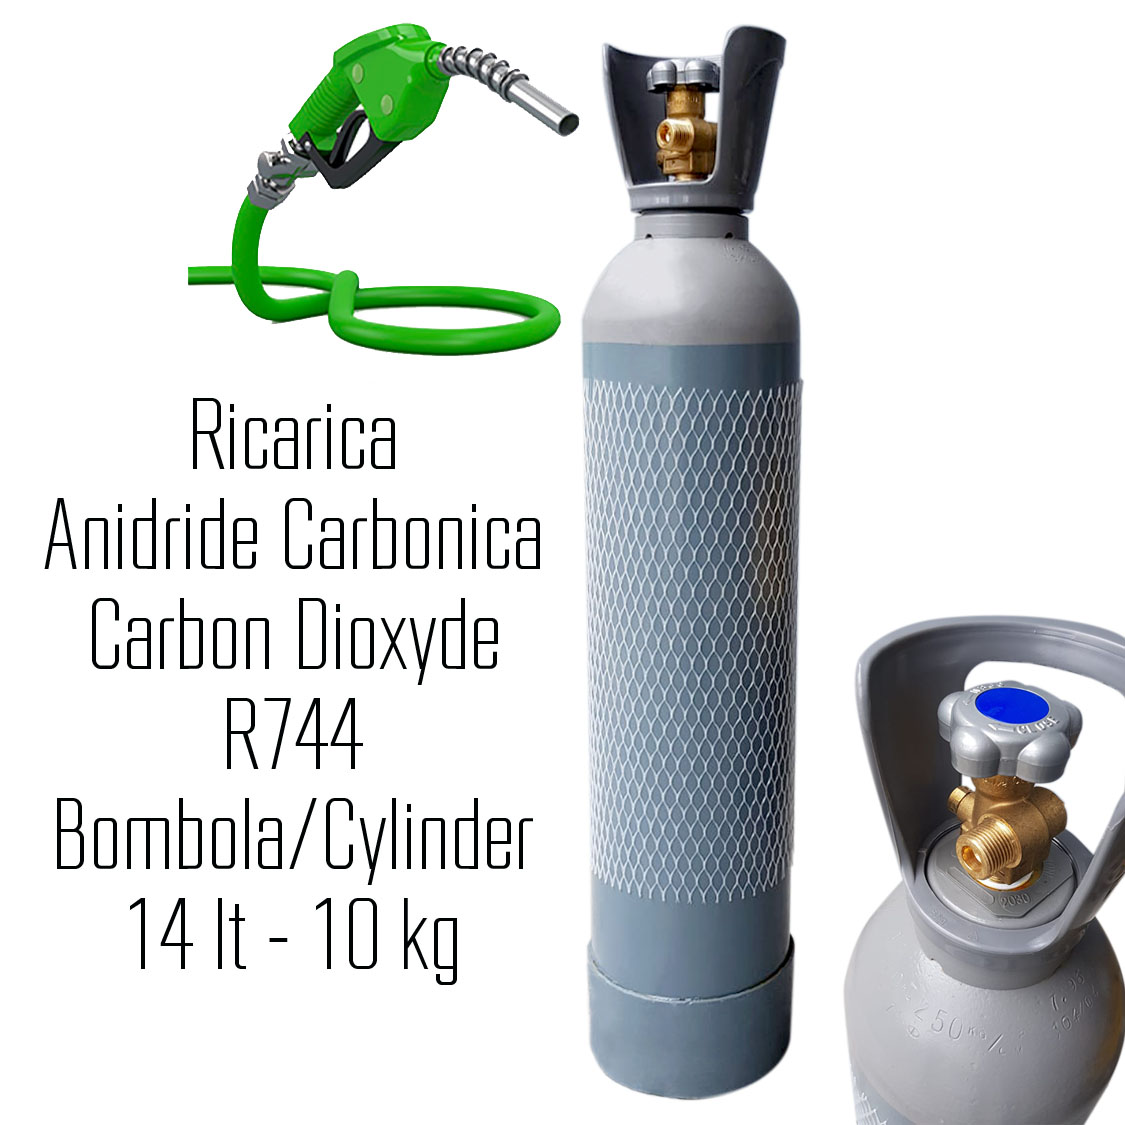 Ricarica R744 Kryon® 744 - CO2 anidride carbonica refrigerazione - 14 Lt - 10 Kg - Foto 1 